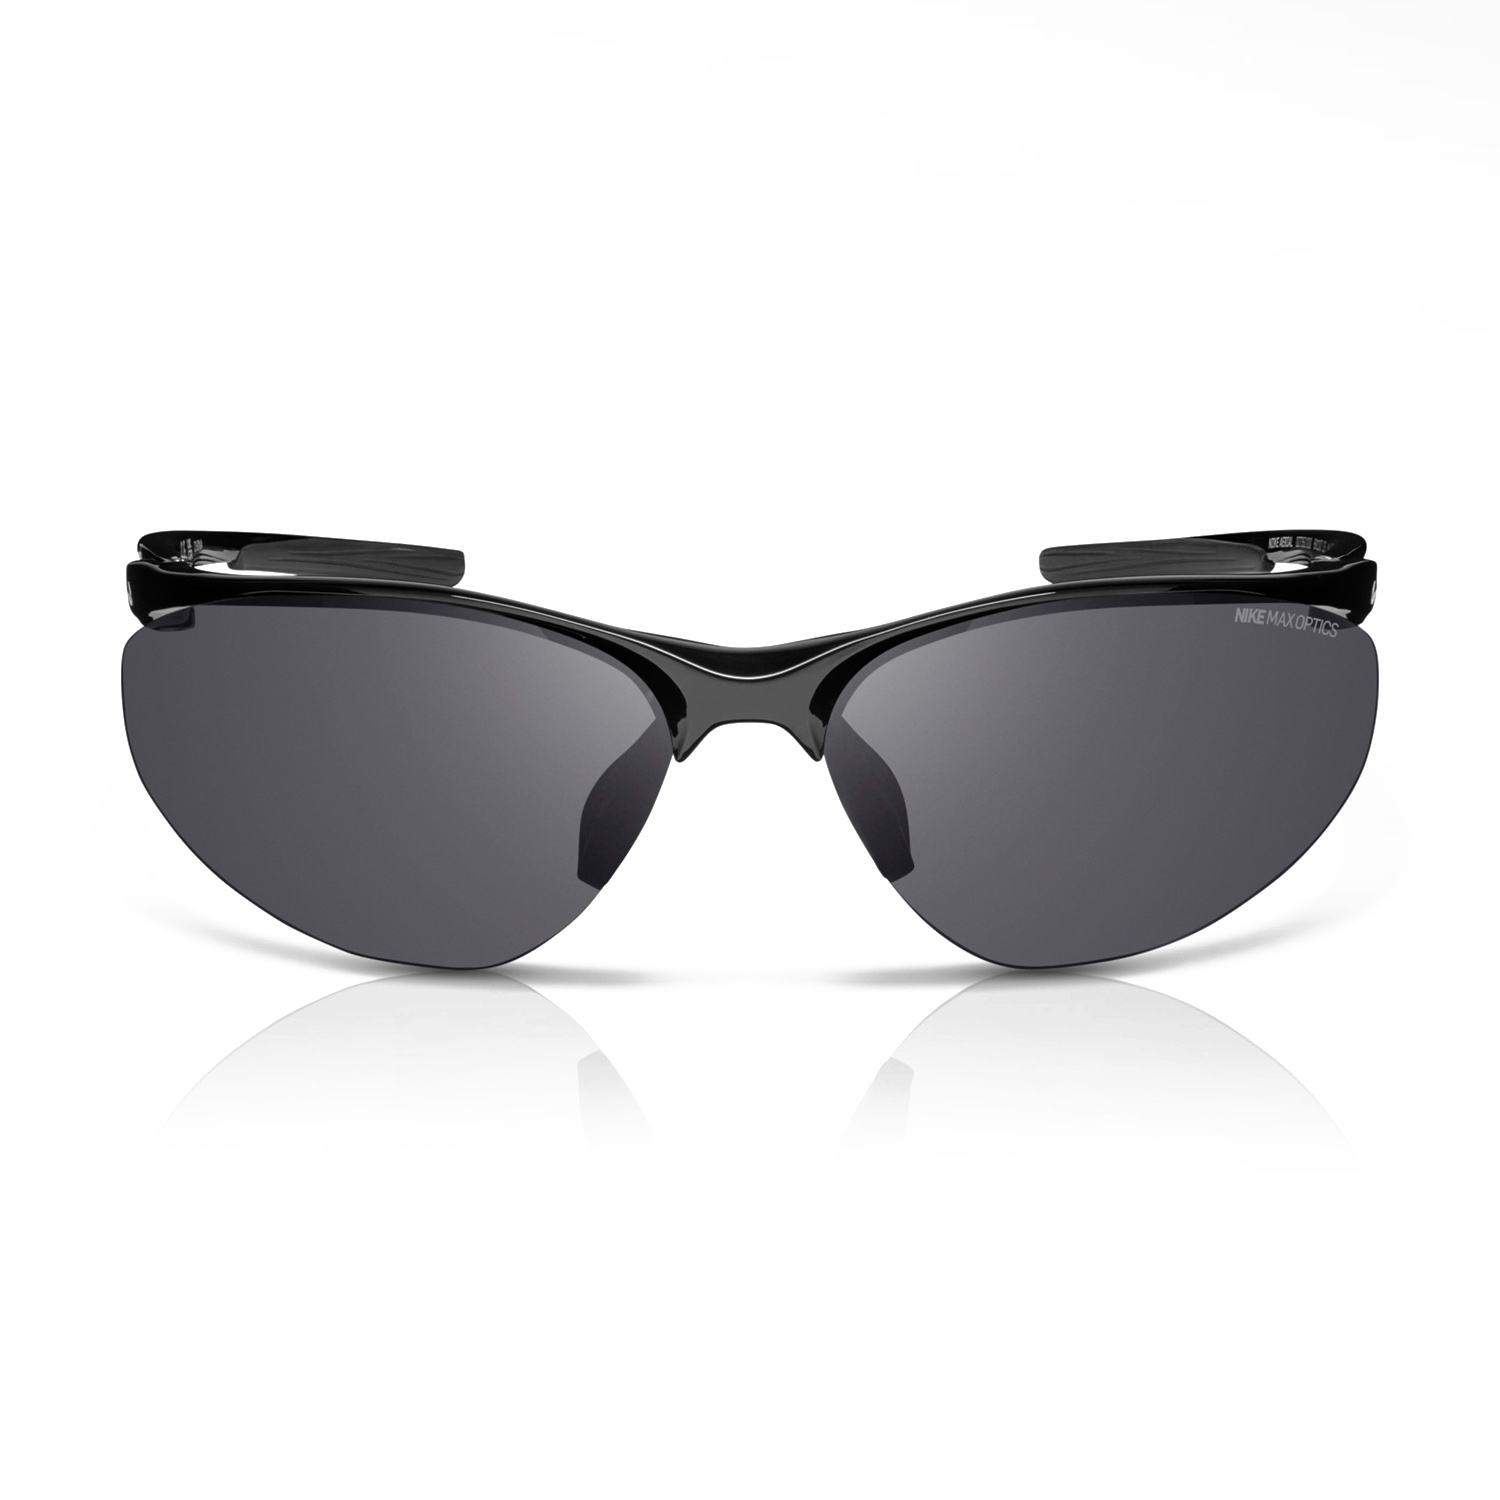 Nike Aerial Sunglasses - Black/Dark Grey